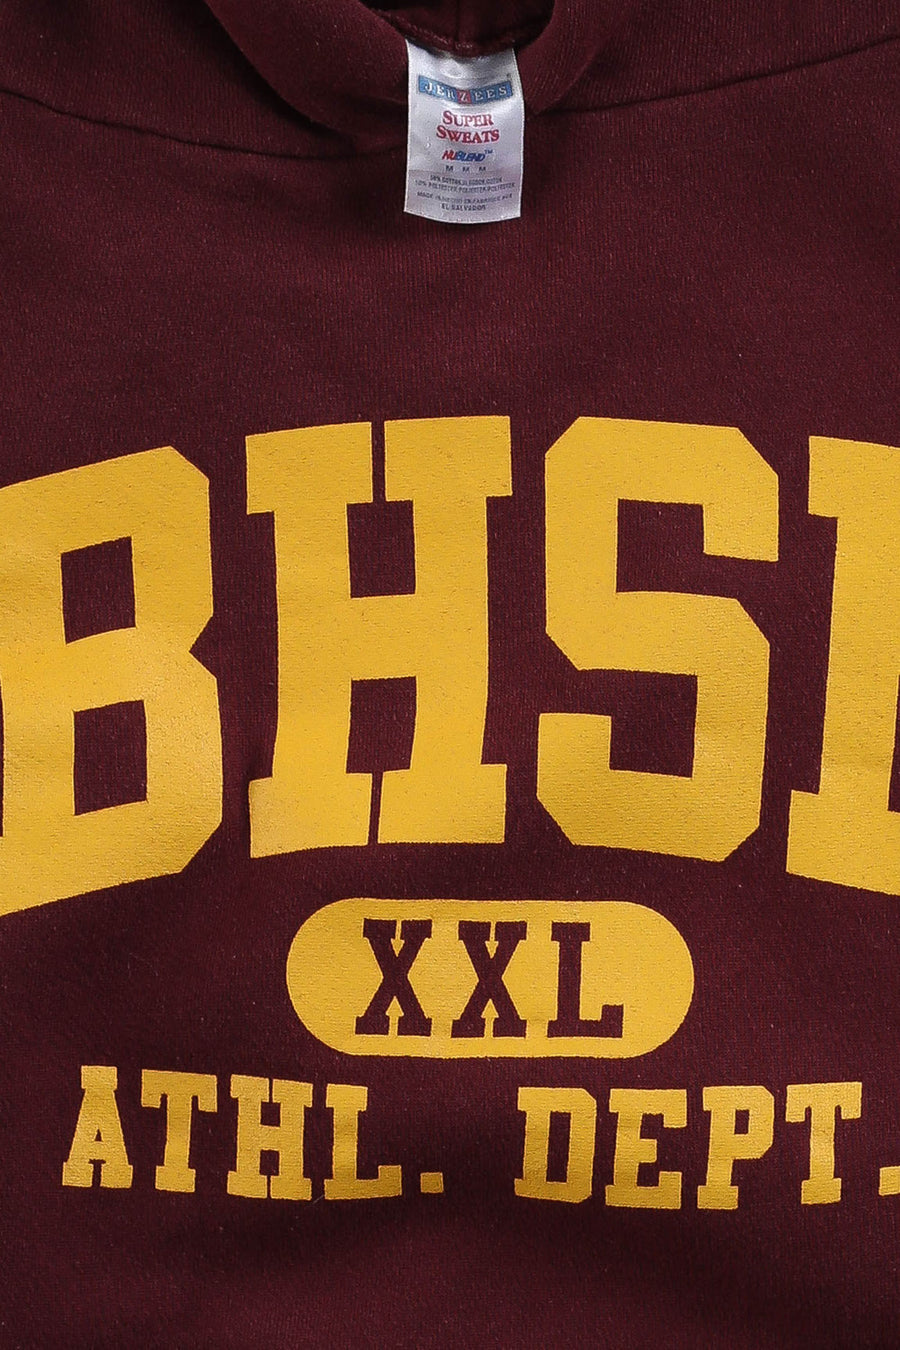 Vintage BHSN Sweatshirt